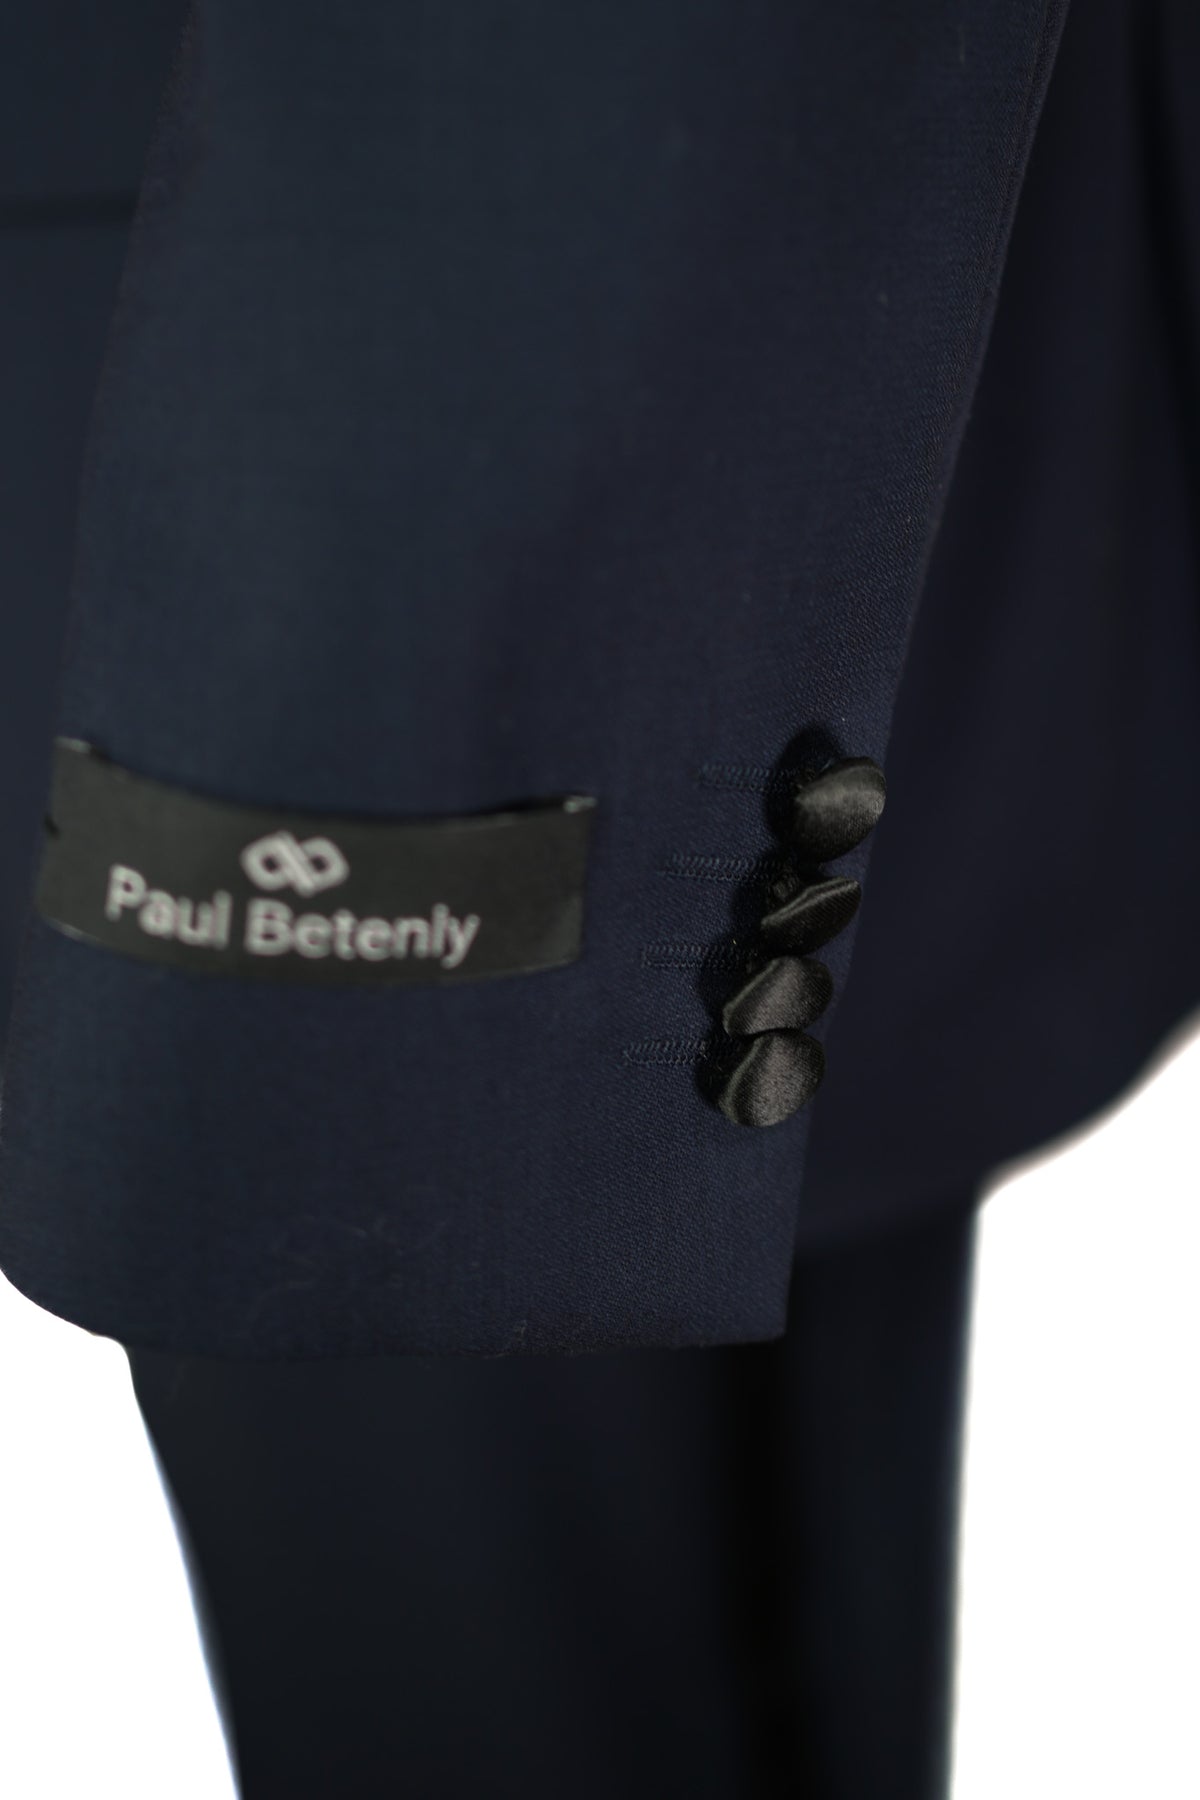 Paul Betenly Tuxedo Navy